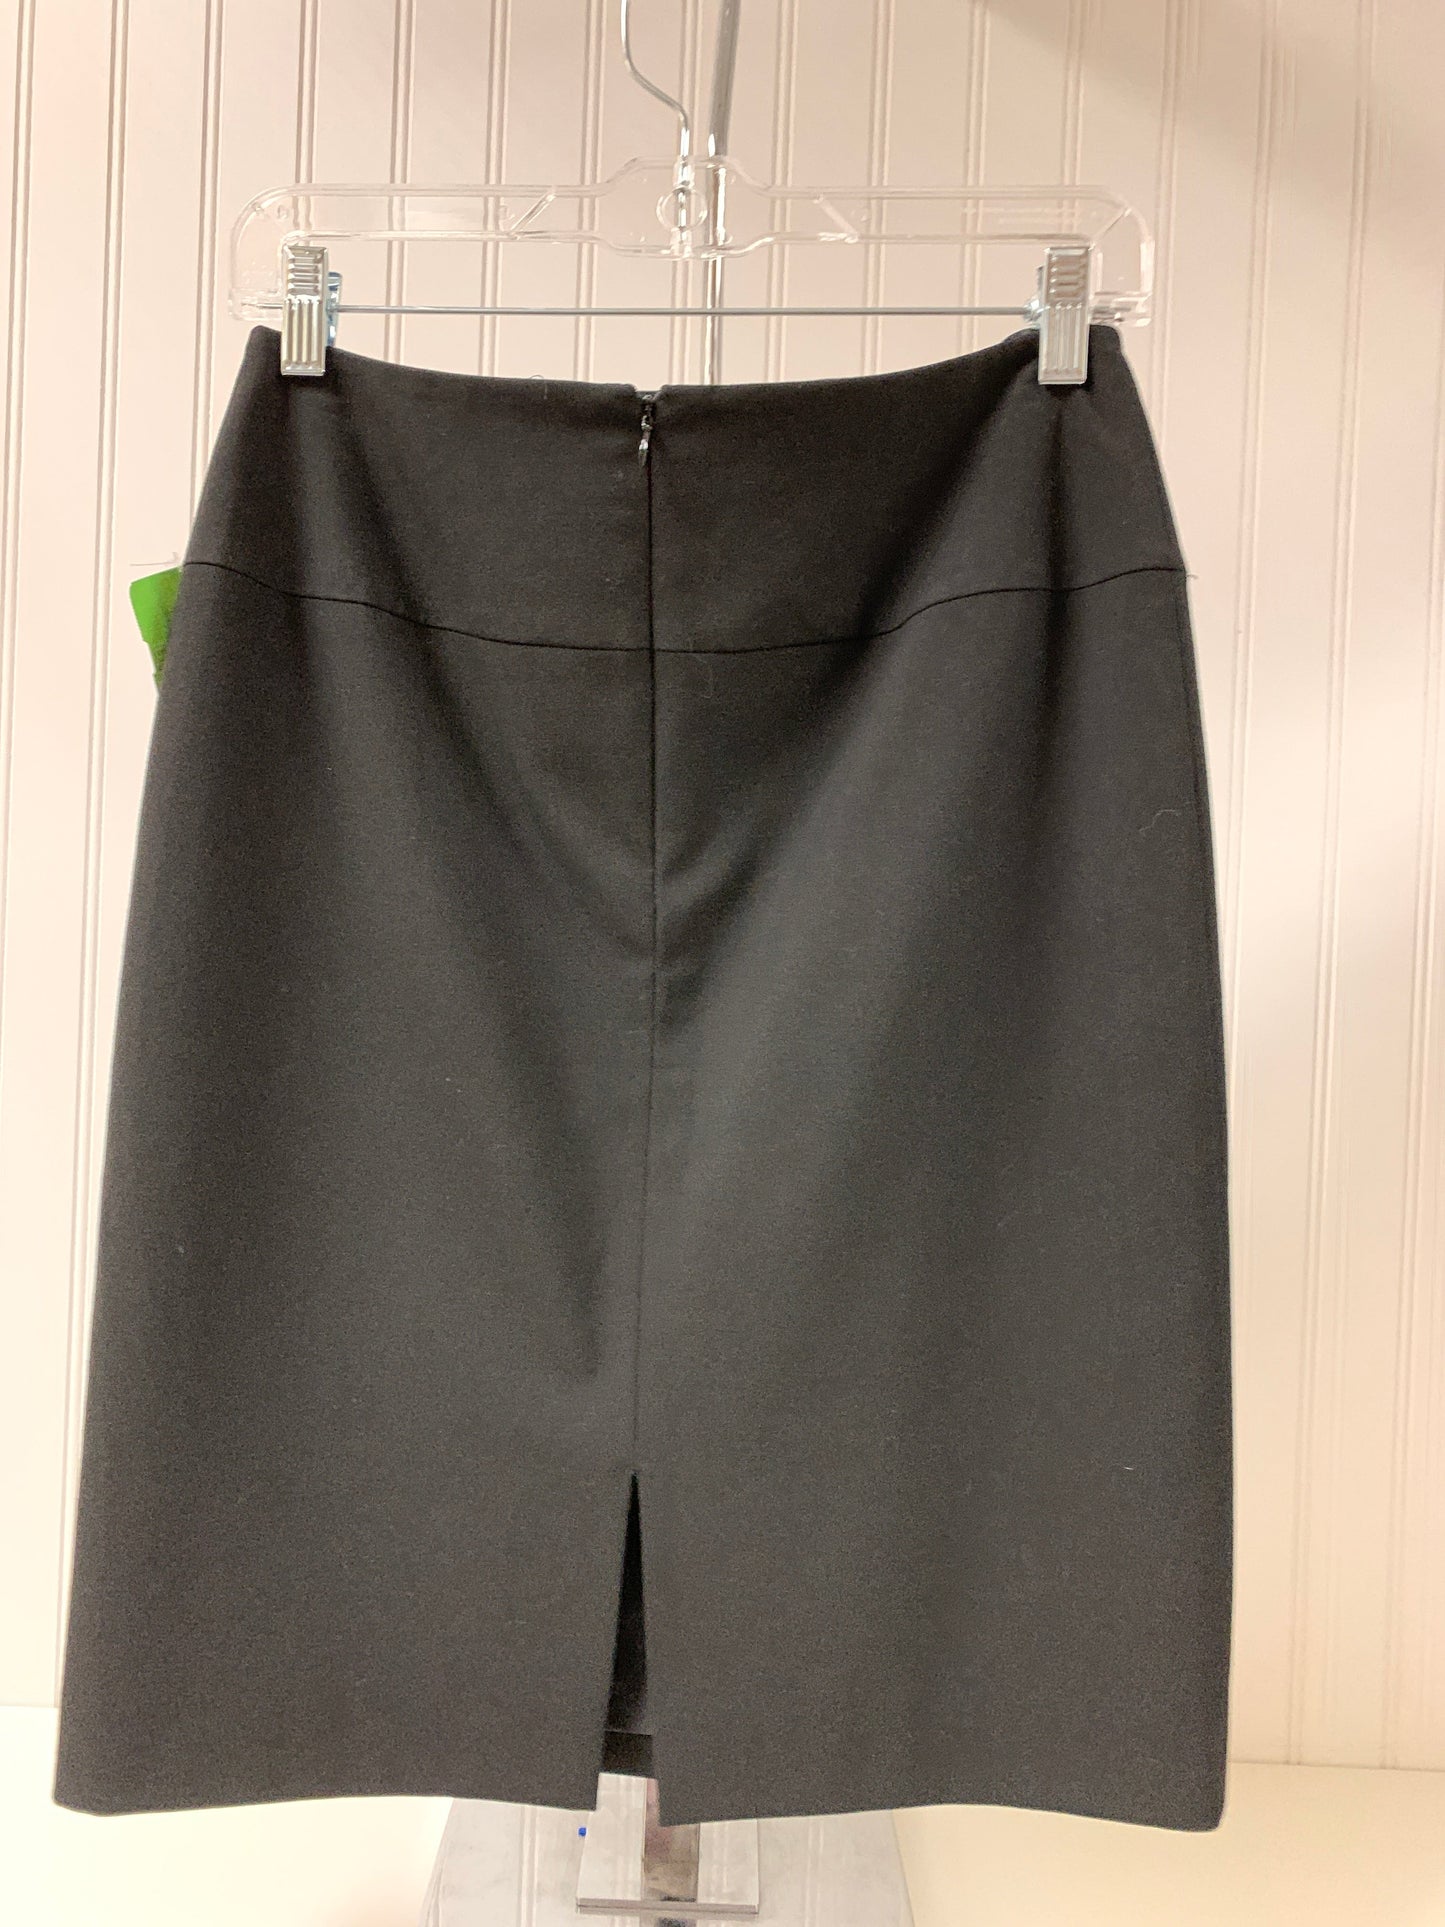 Skirt Midi By Gianni Bini  Size: 2